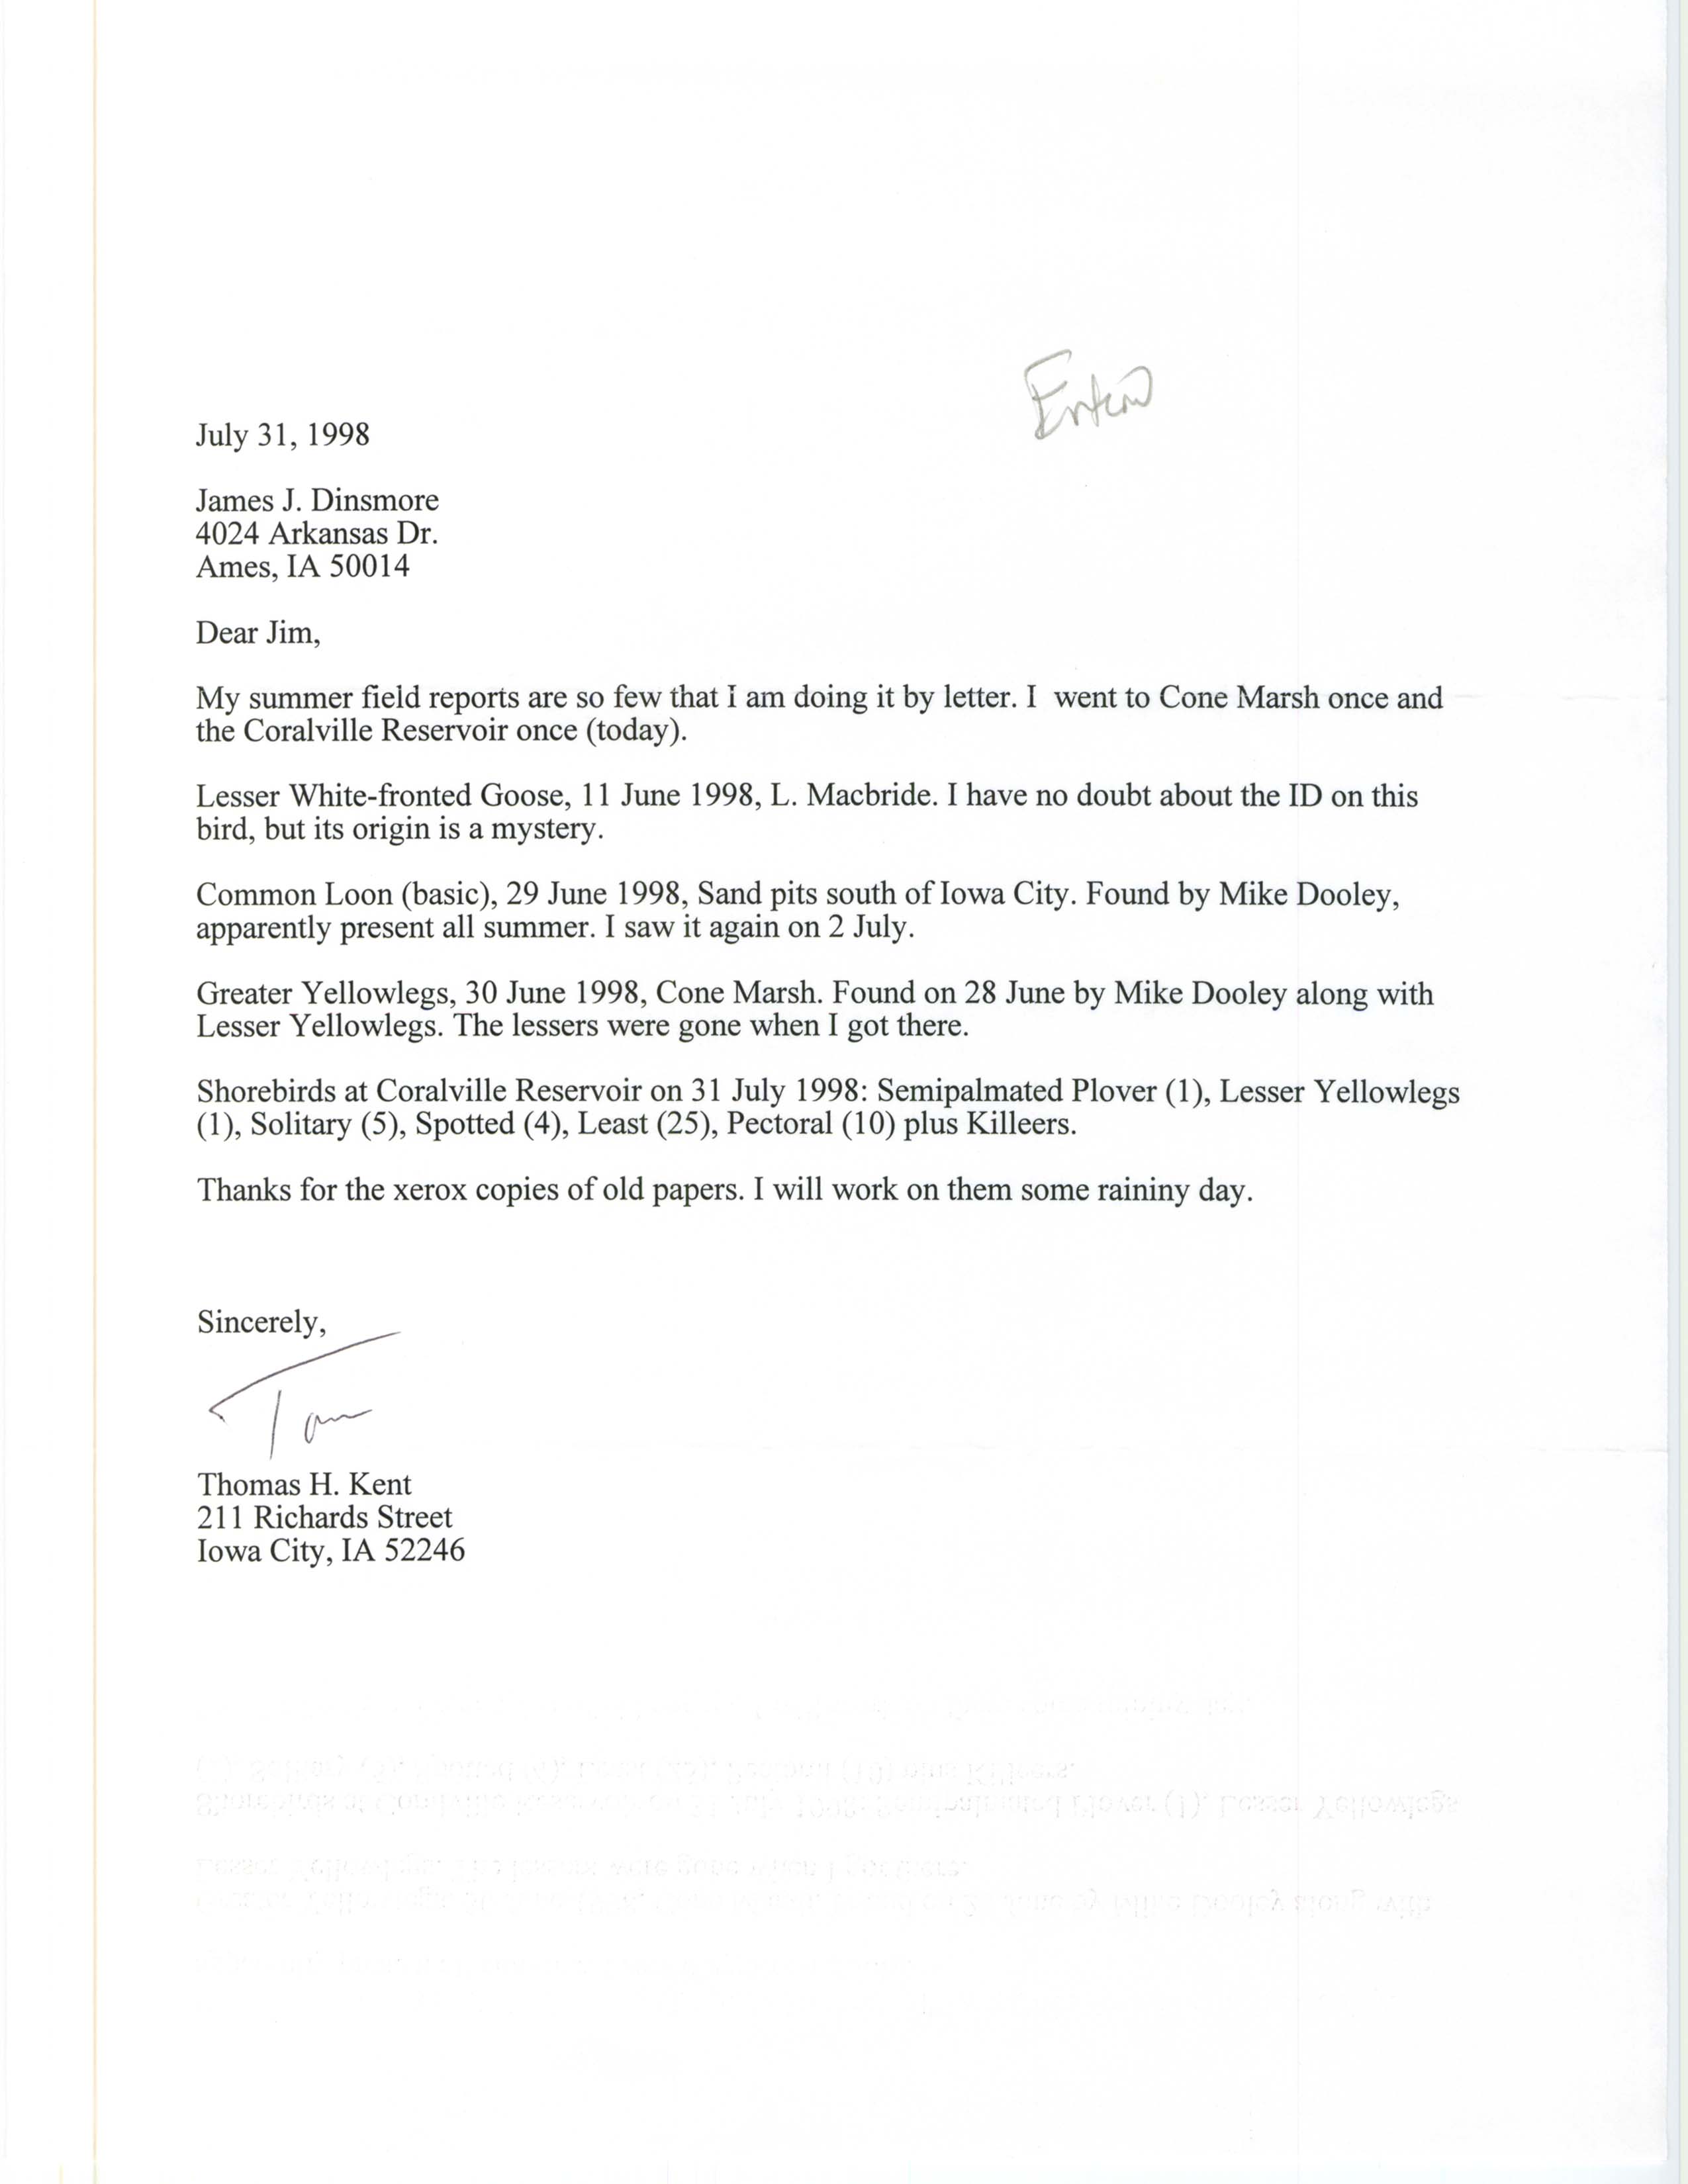 Thomas Kent letter to Jim Dinsmore regarding summer field reports, July 31, 1998